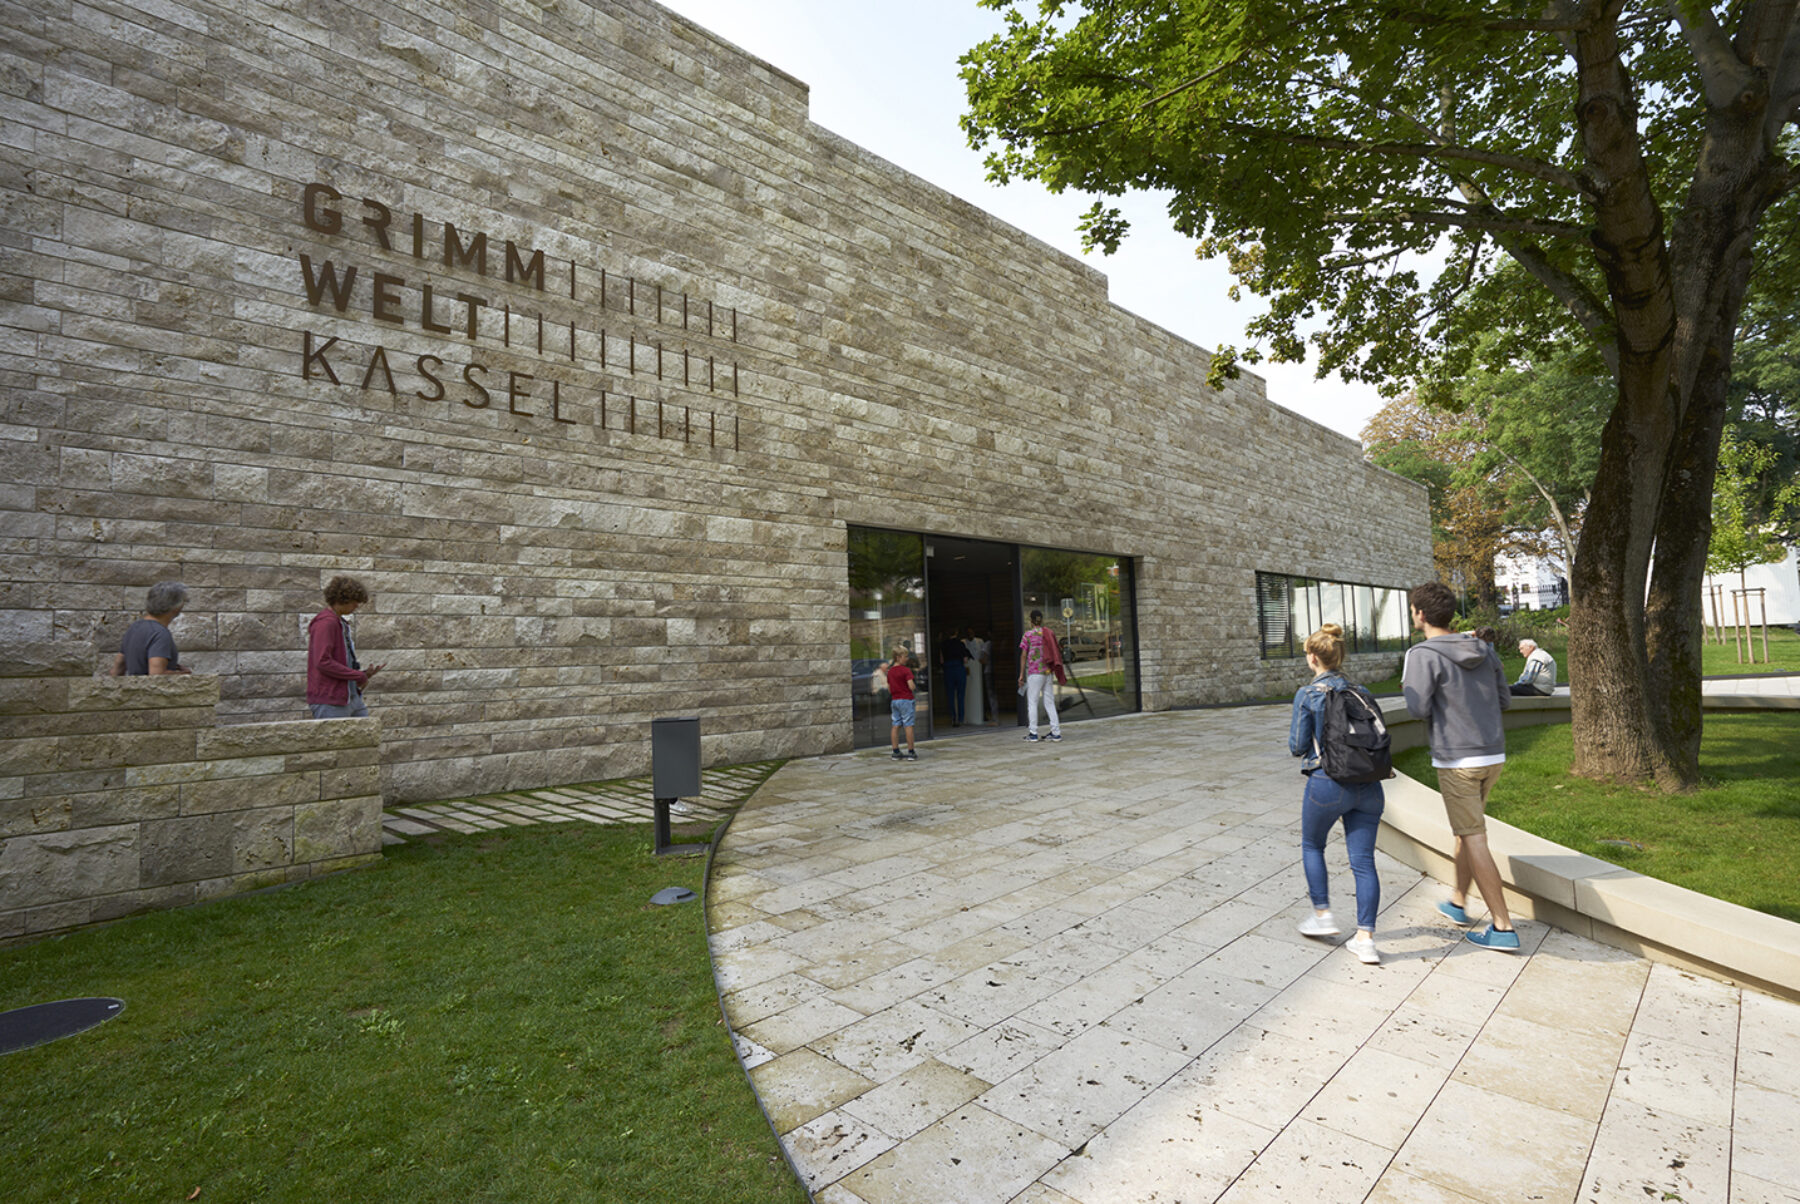 GRIMMWELT Kassel | Entrance area with visitors | Photo: Nikolaus Frank